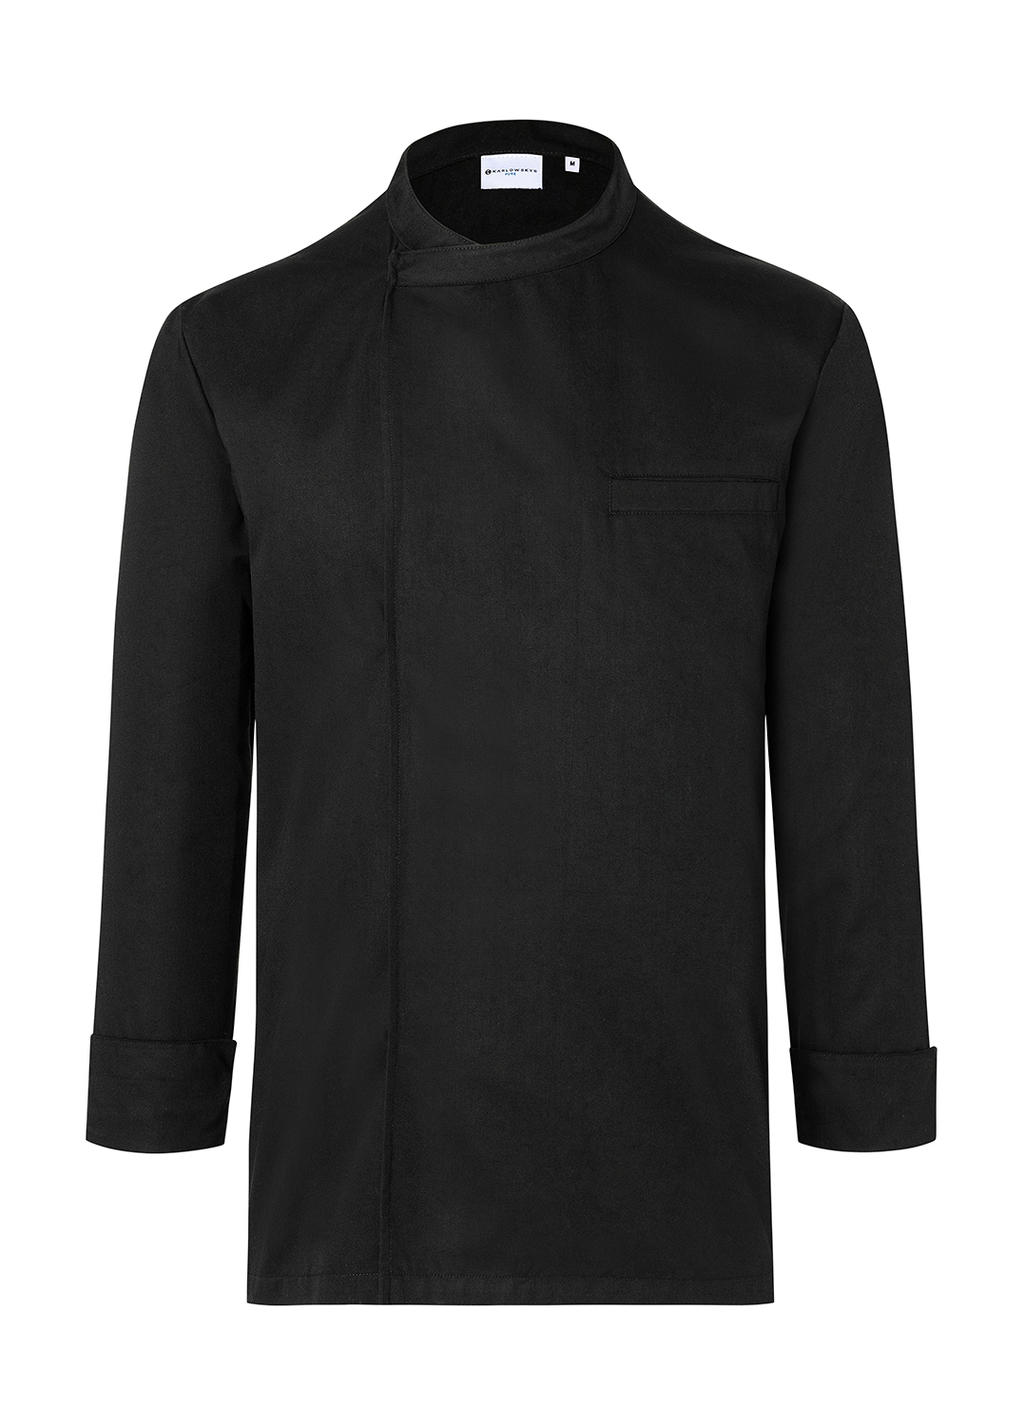  Chefs Shirt Basic Long Sleeve in Farbe Black